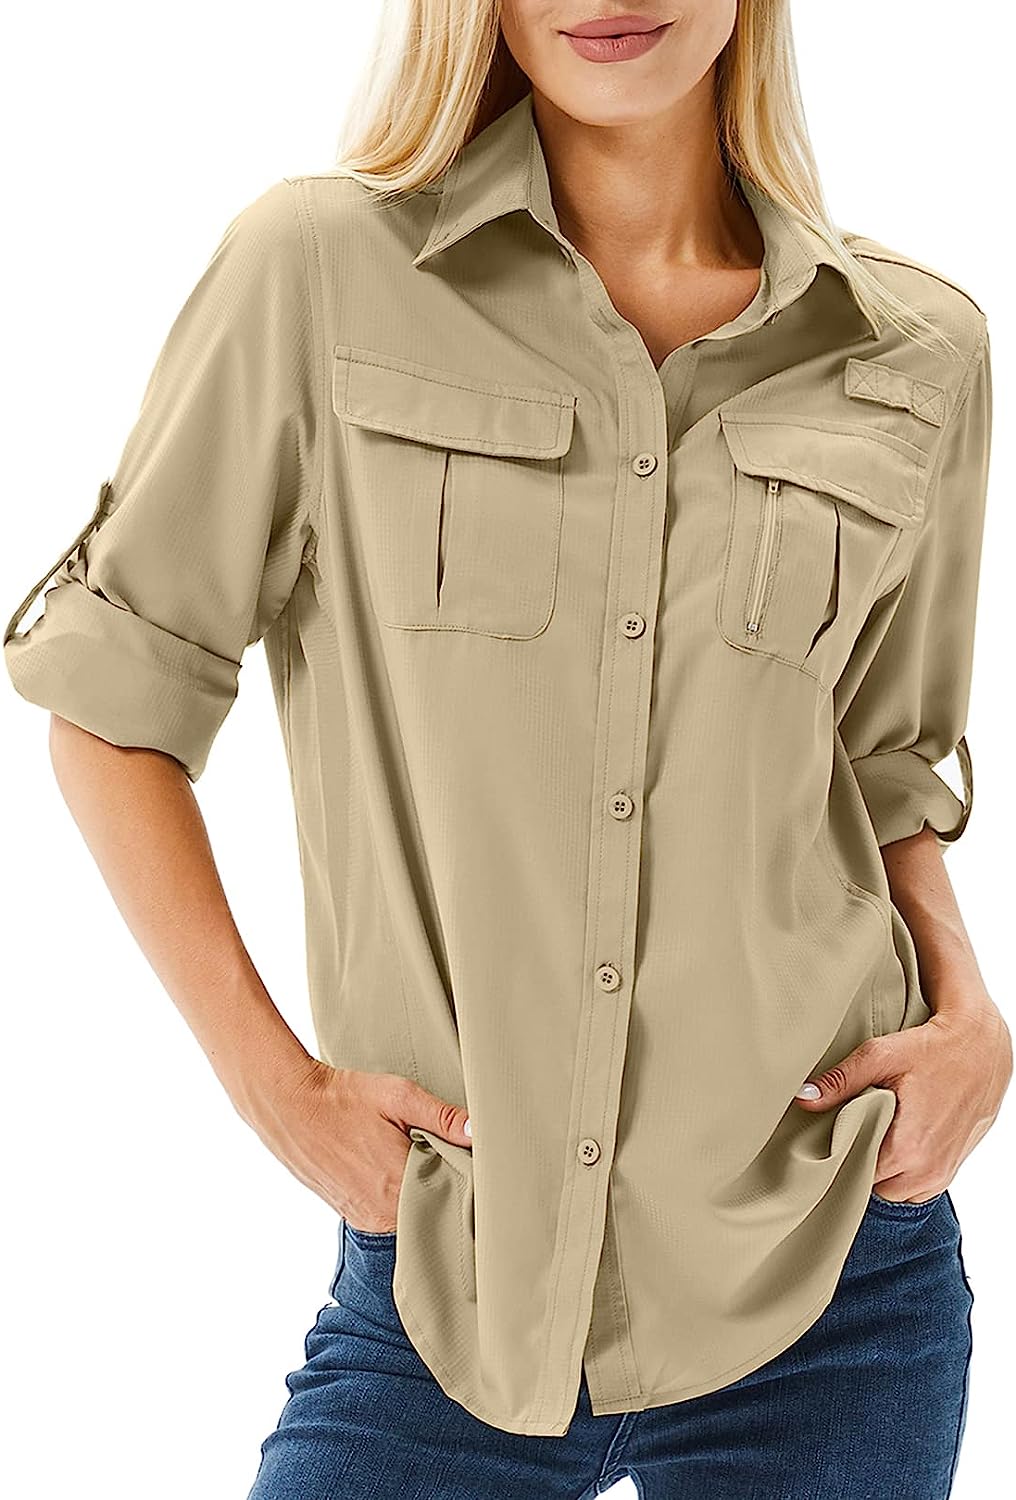 Toumett Women's UPF 50 Long Sleeve UV Sun Protection Safari Shirts Outdoor  Quick